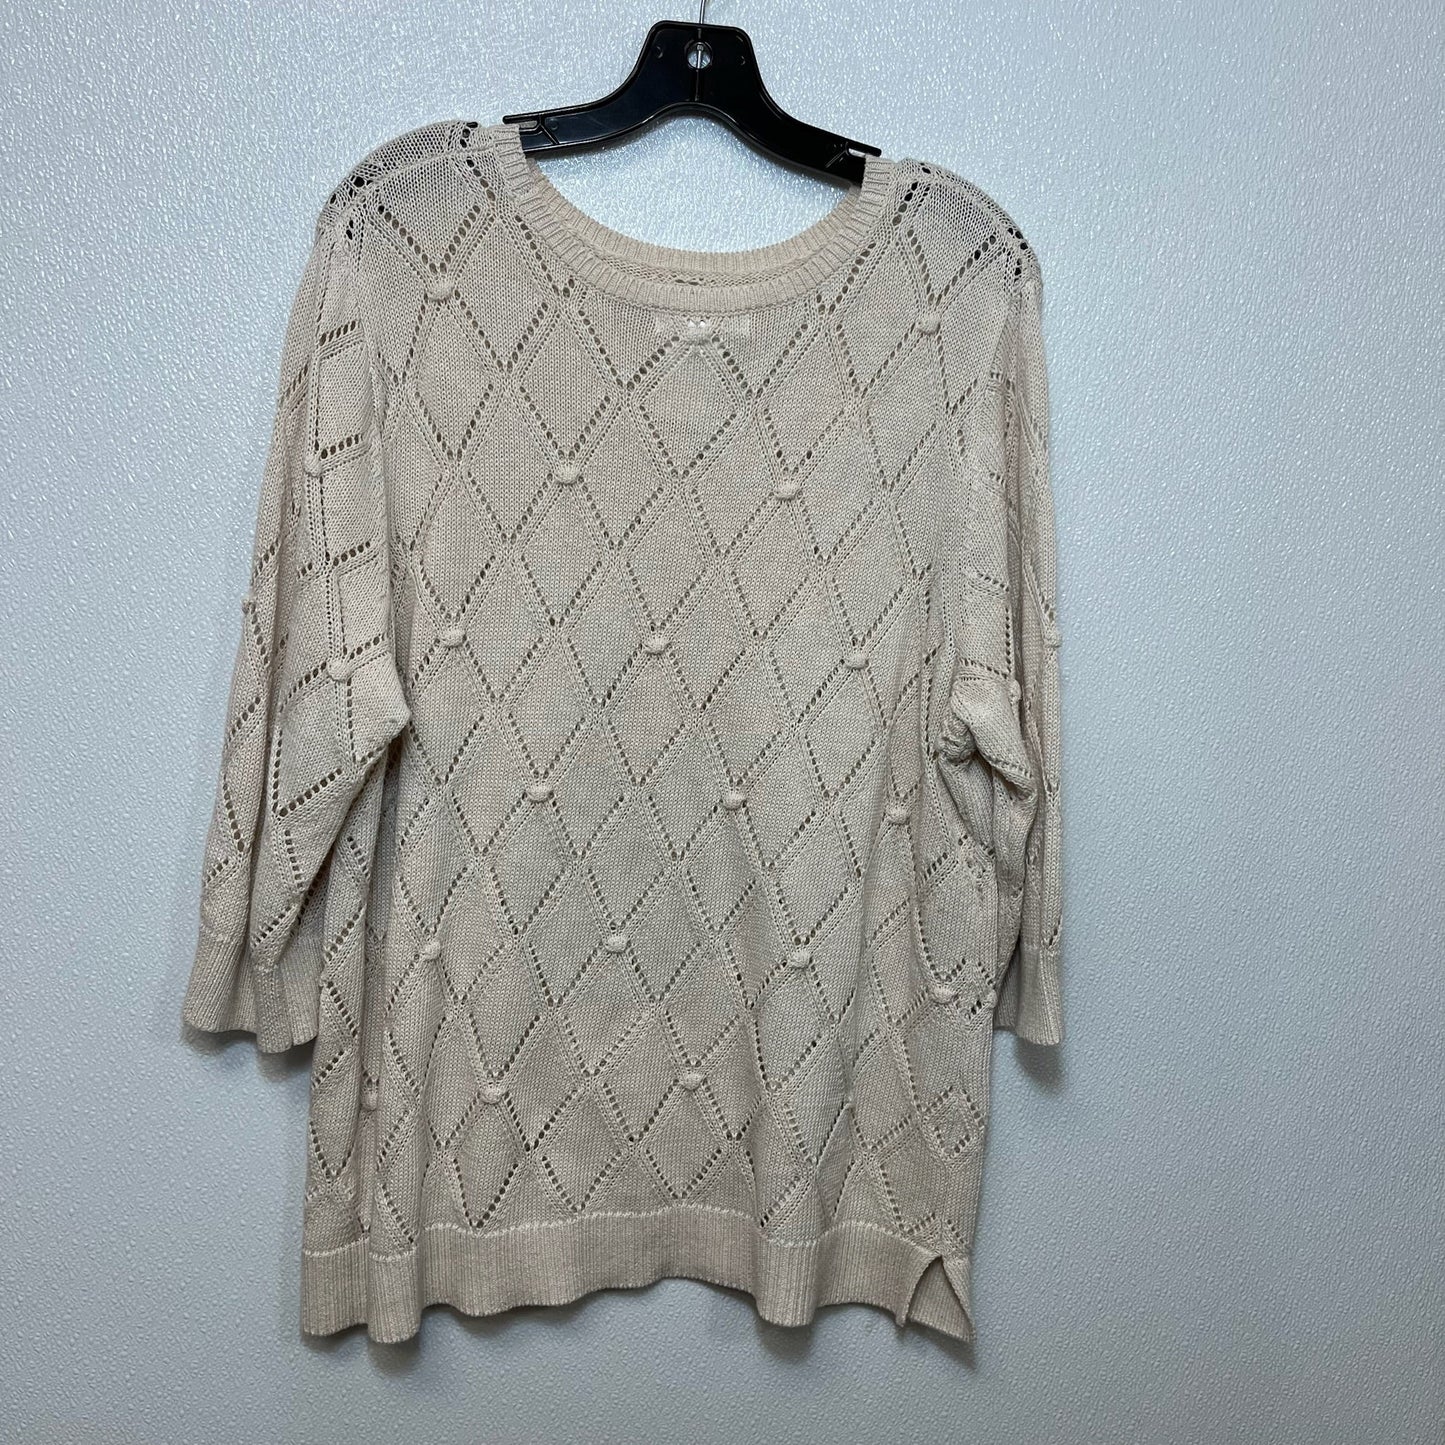 Sweater By Cmf  Size: 1x